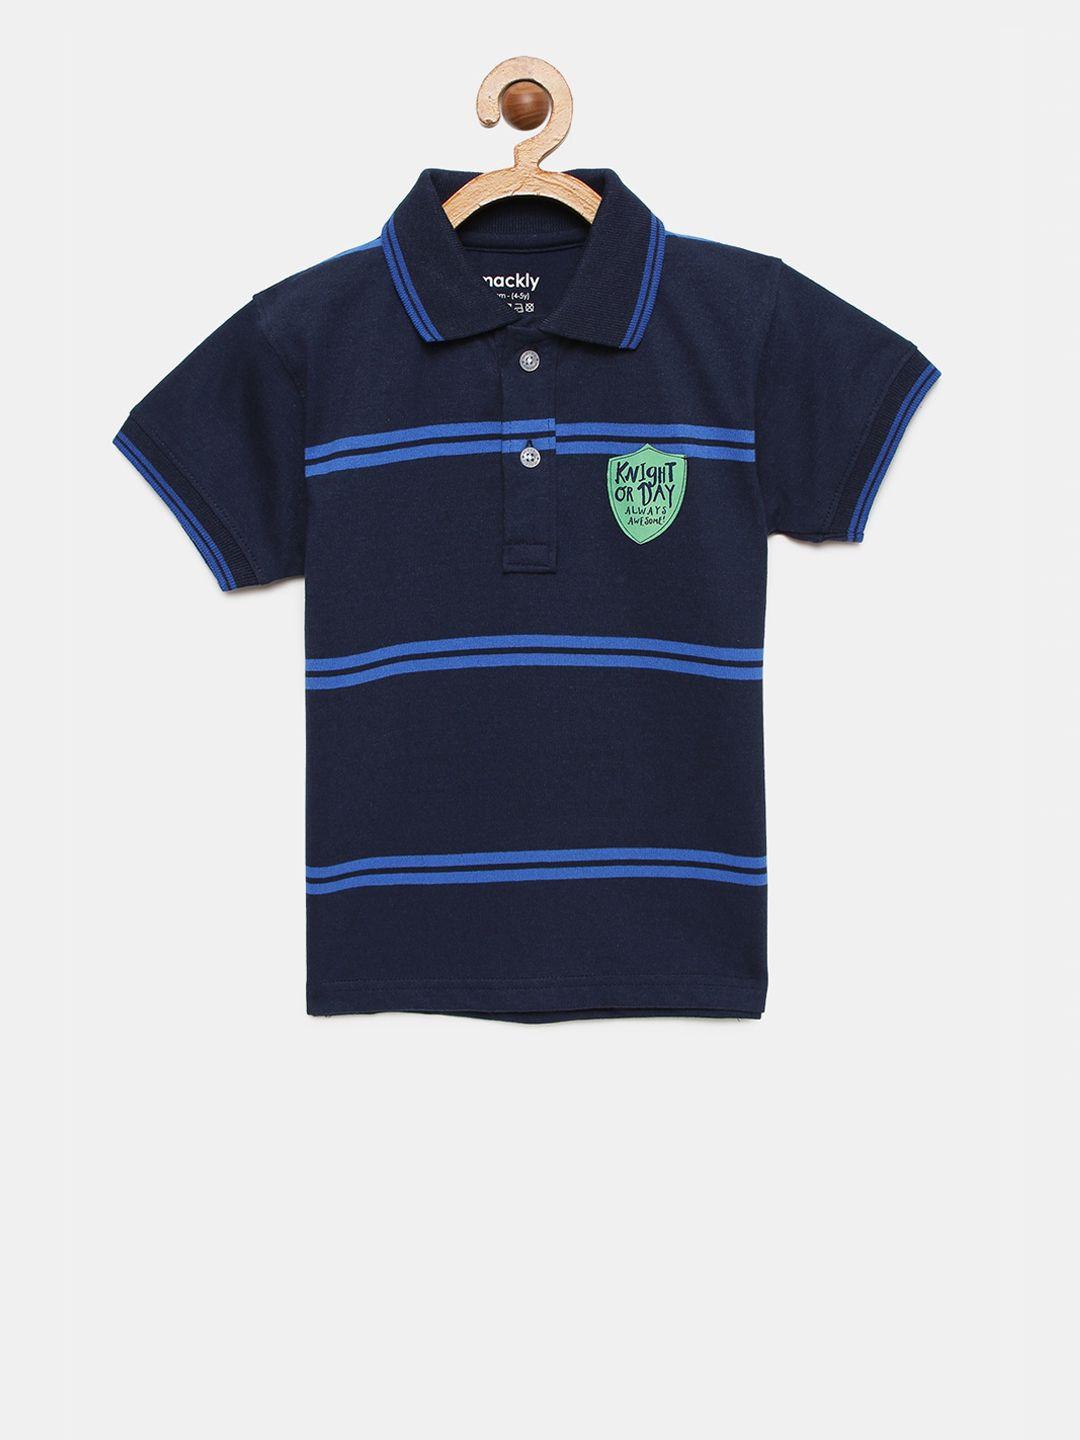 mackly boys navy blue & blue striped polo collar t-shirt